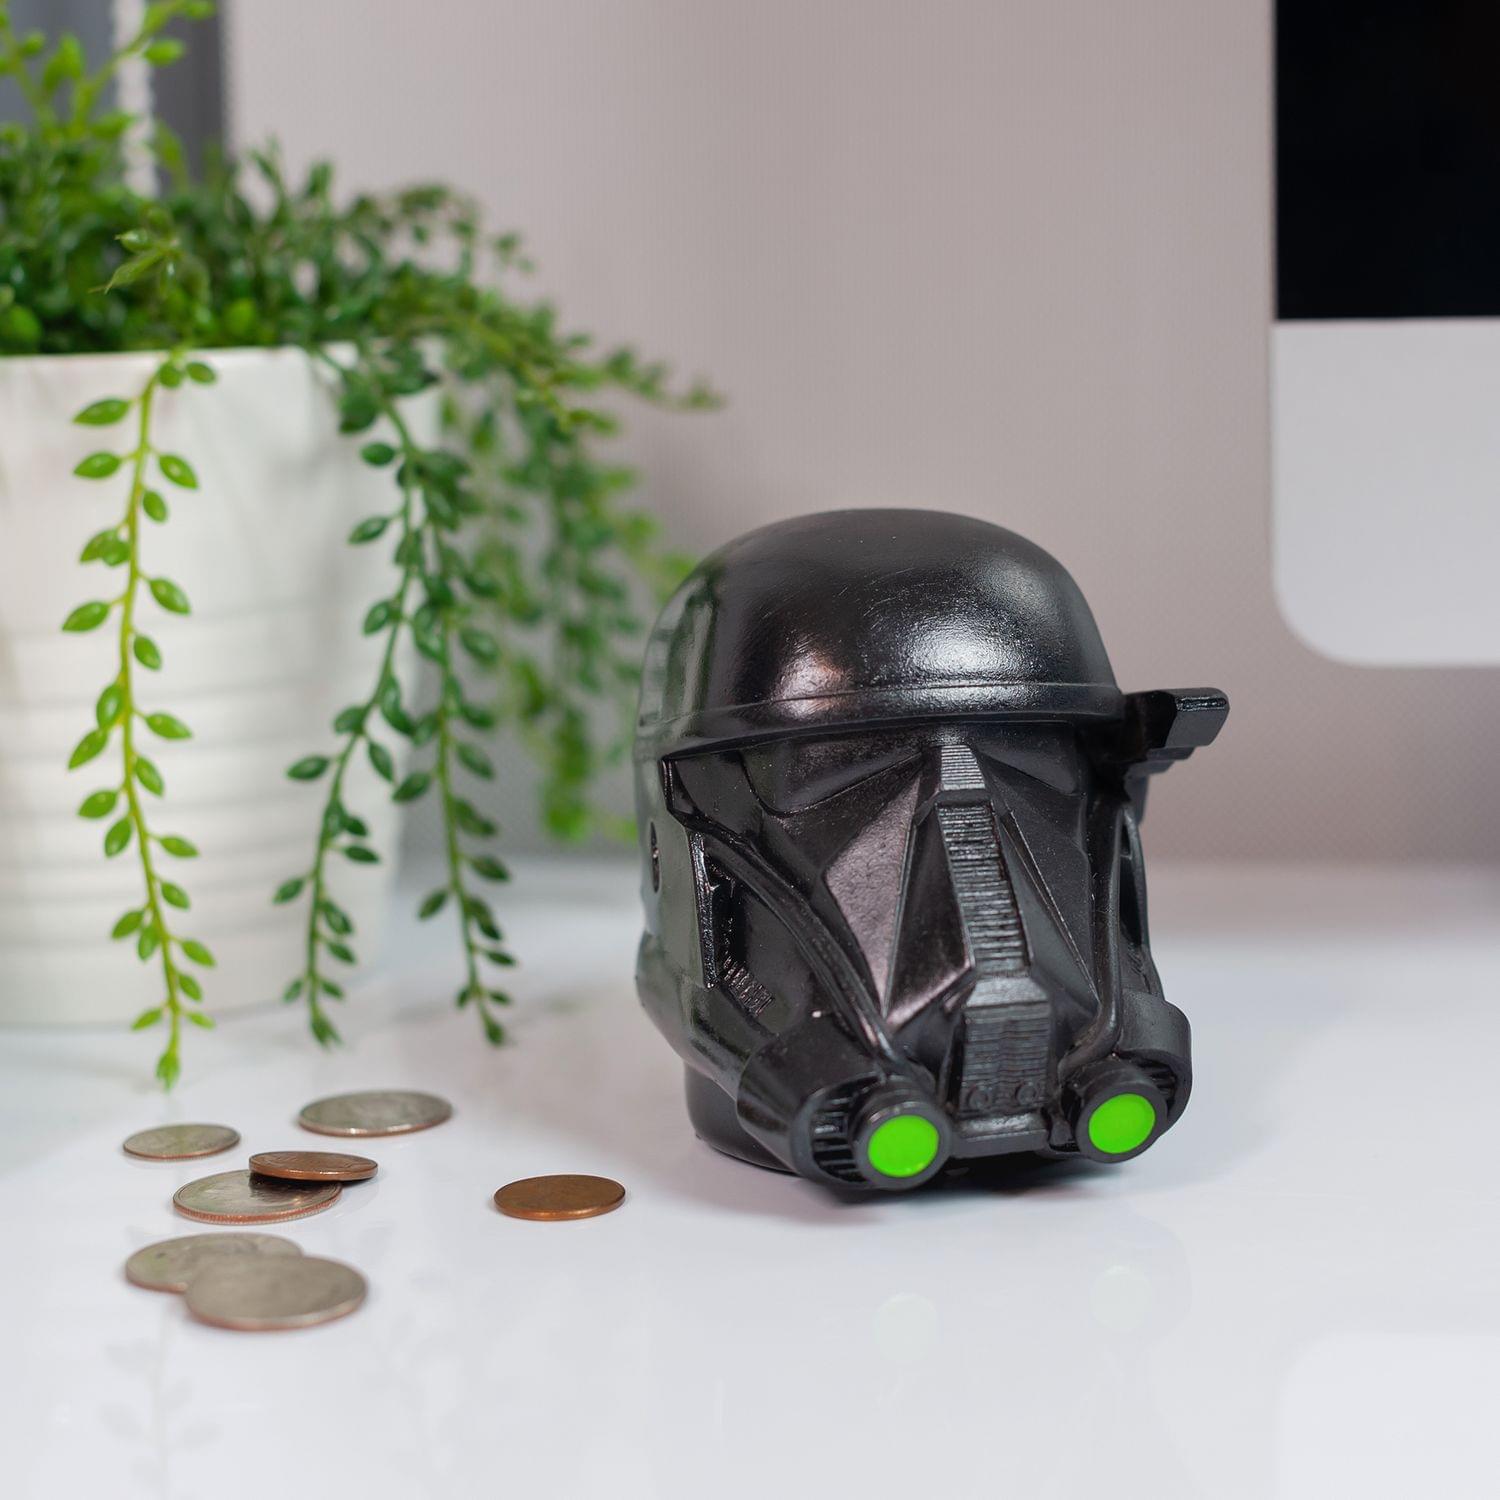 Star Wars Collectibles | Death Trooper Helmet Exclusive Replica Coin Bank